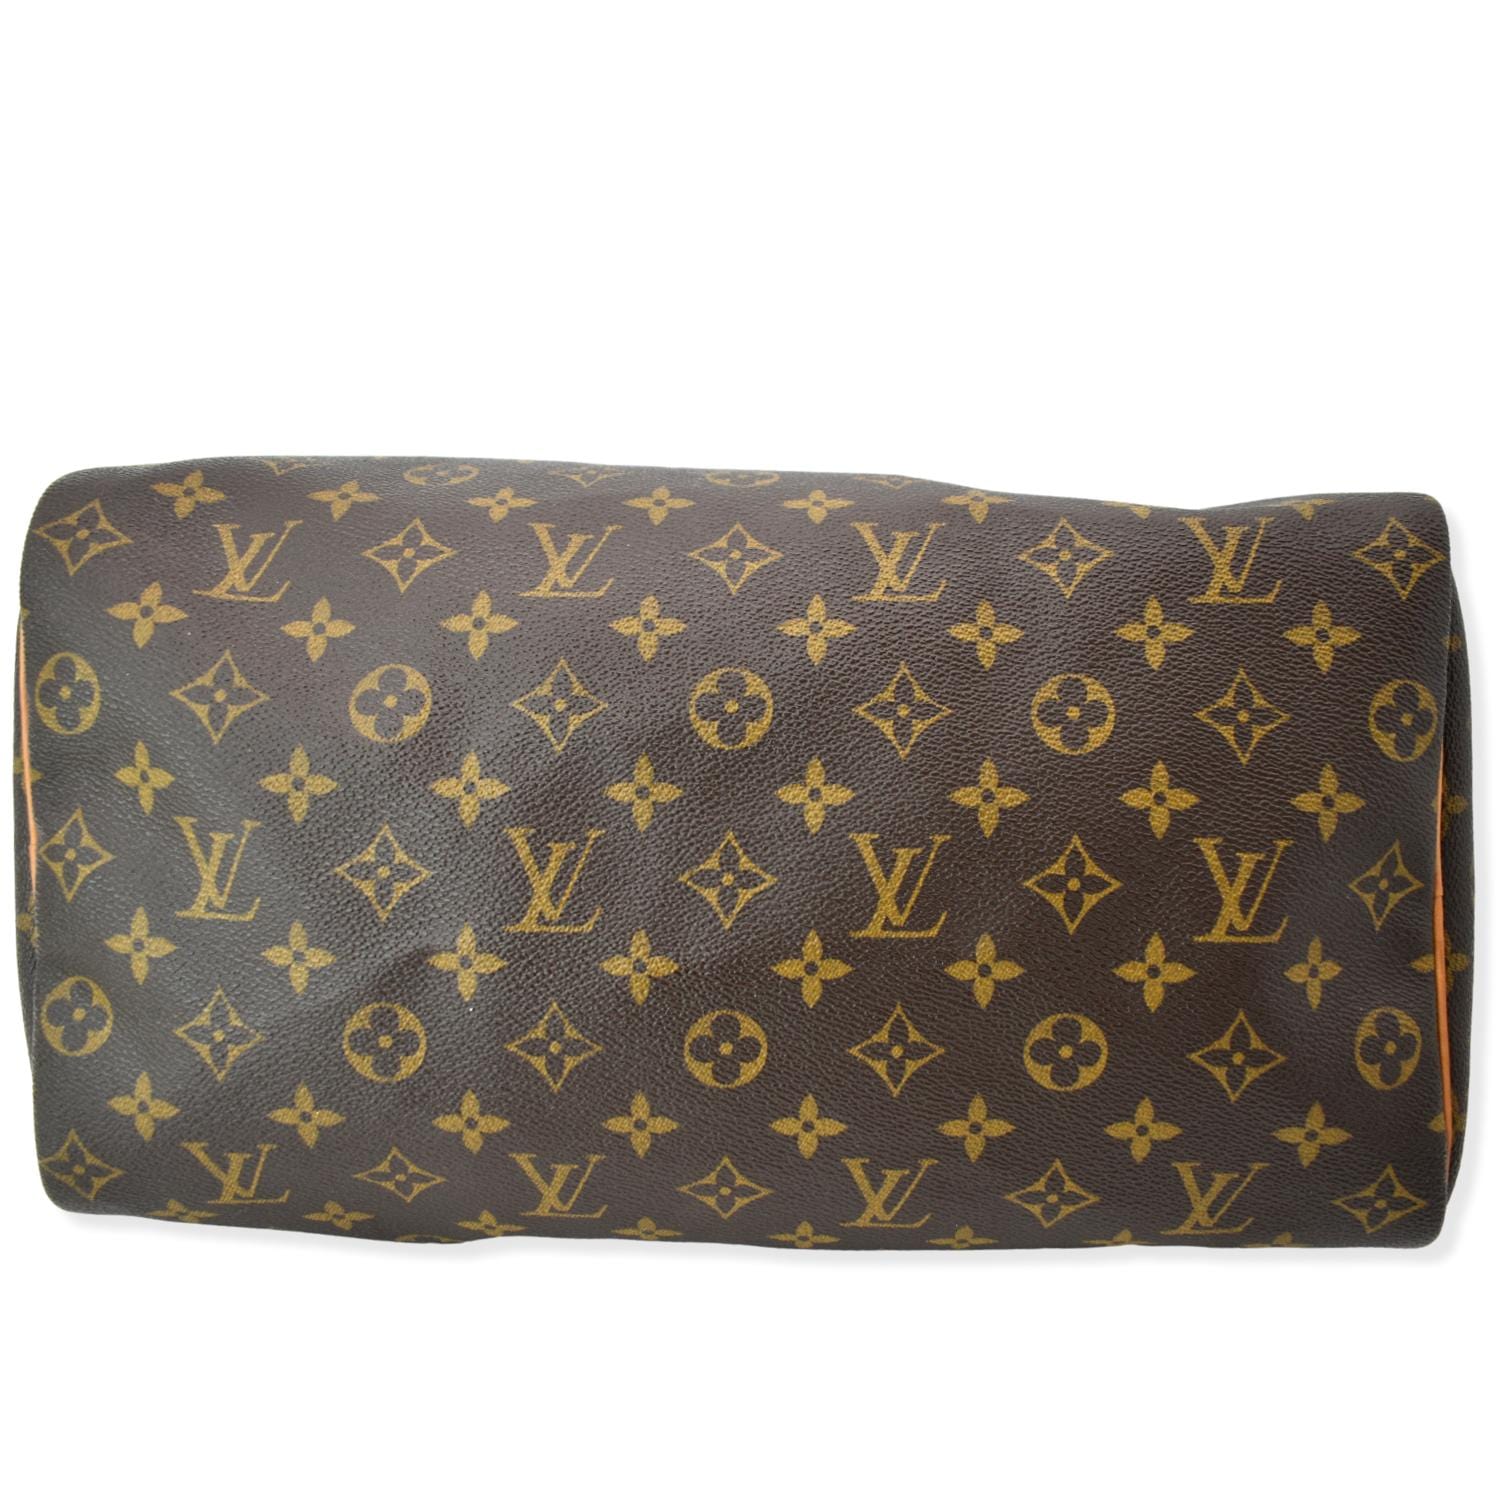 Authentic Louis Vuitton Speedy 35 Hand Bag Monogram Brown #17009